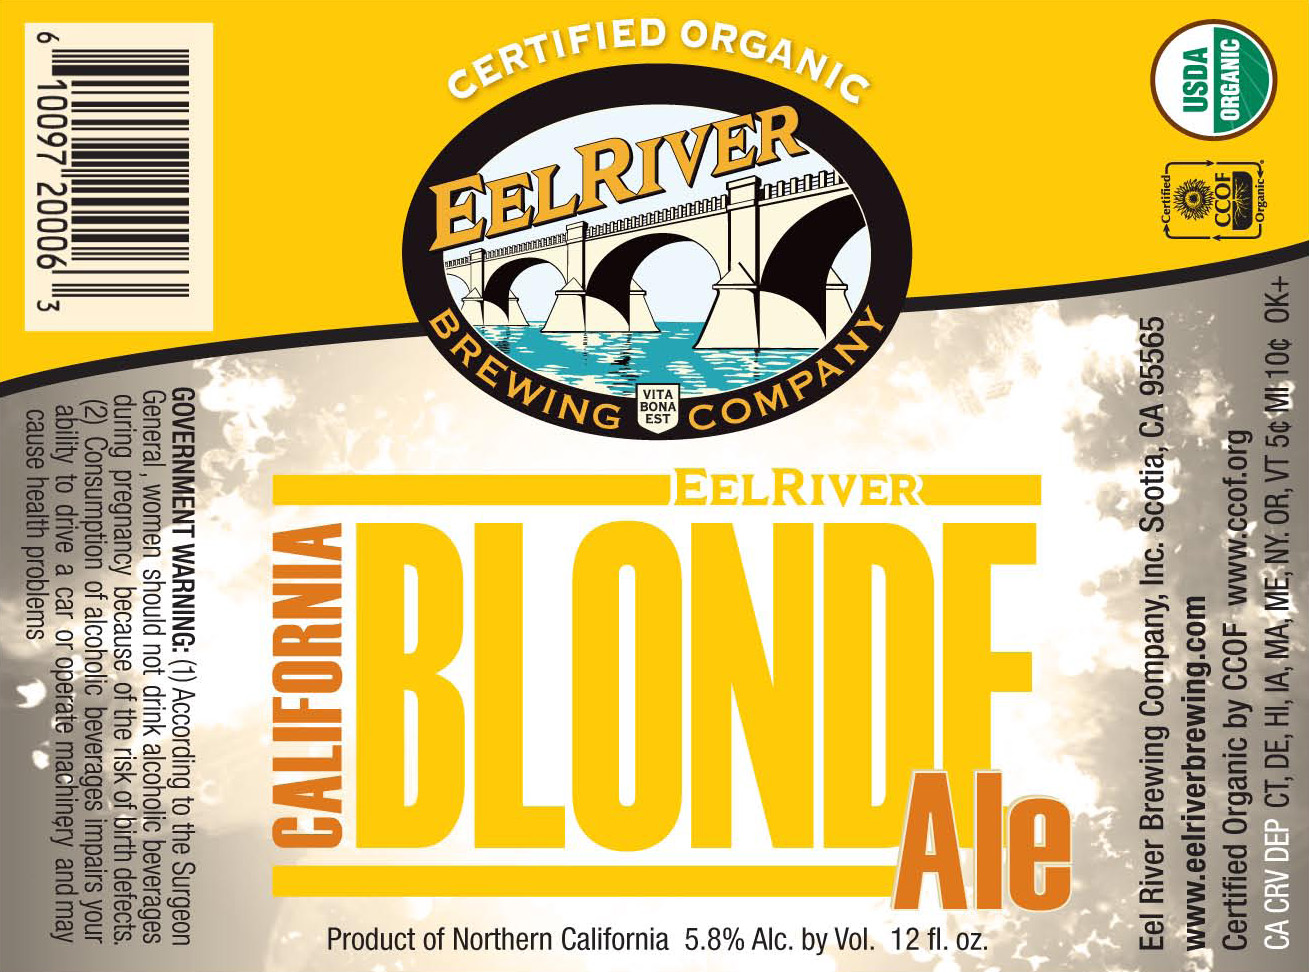 Eel River Blonde Ale